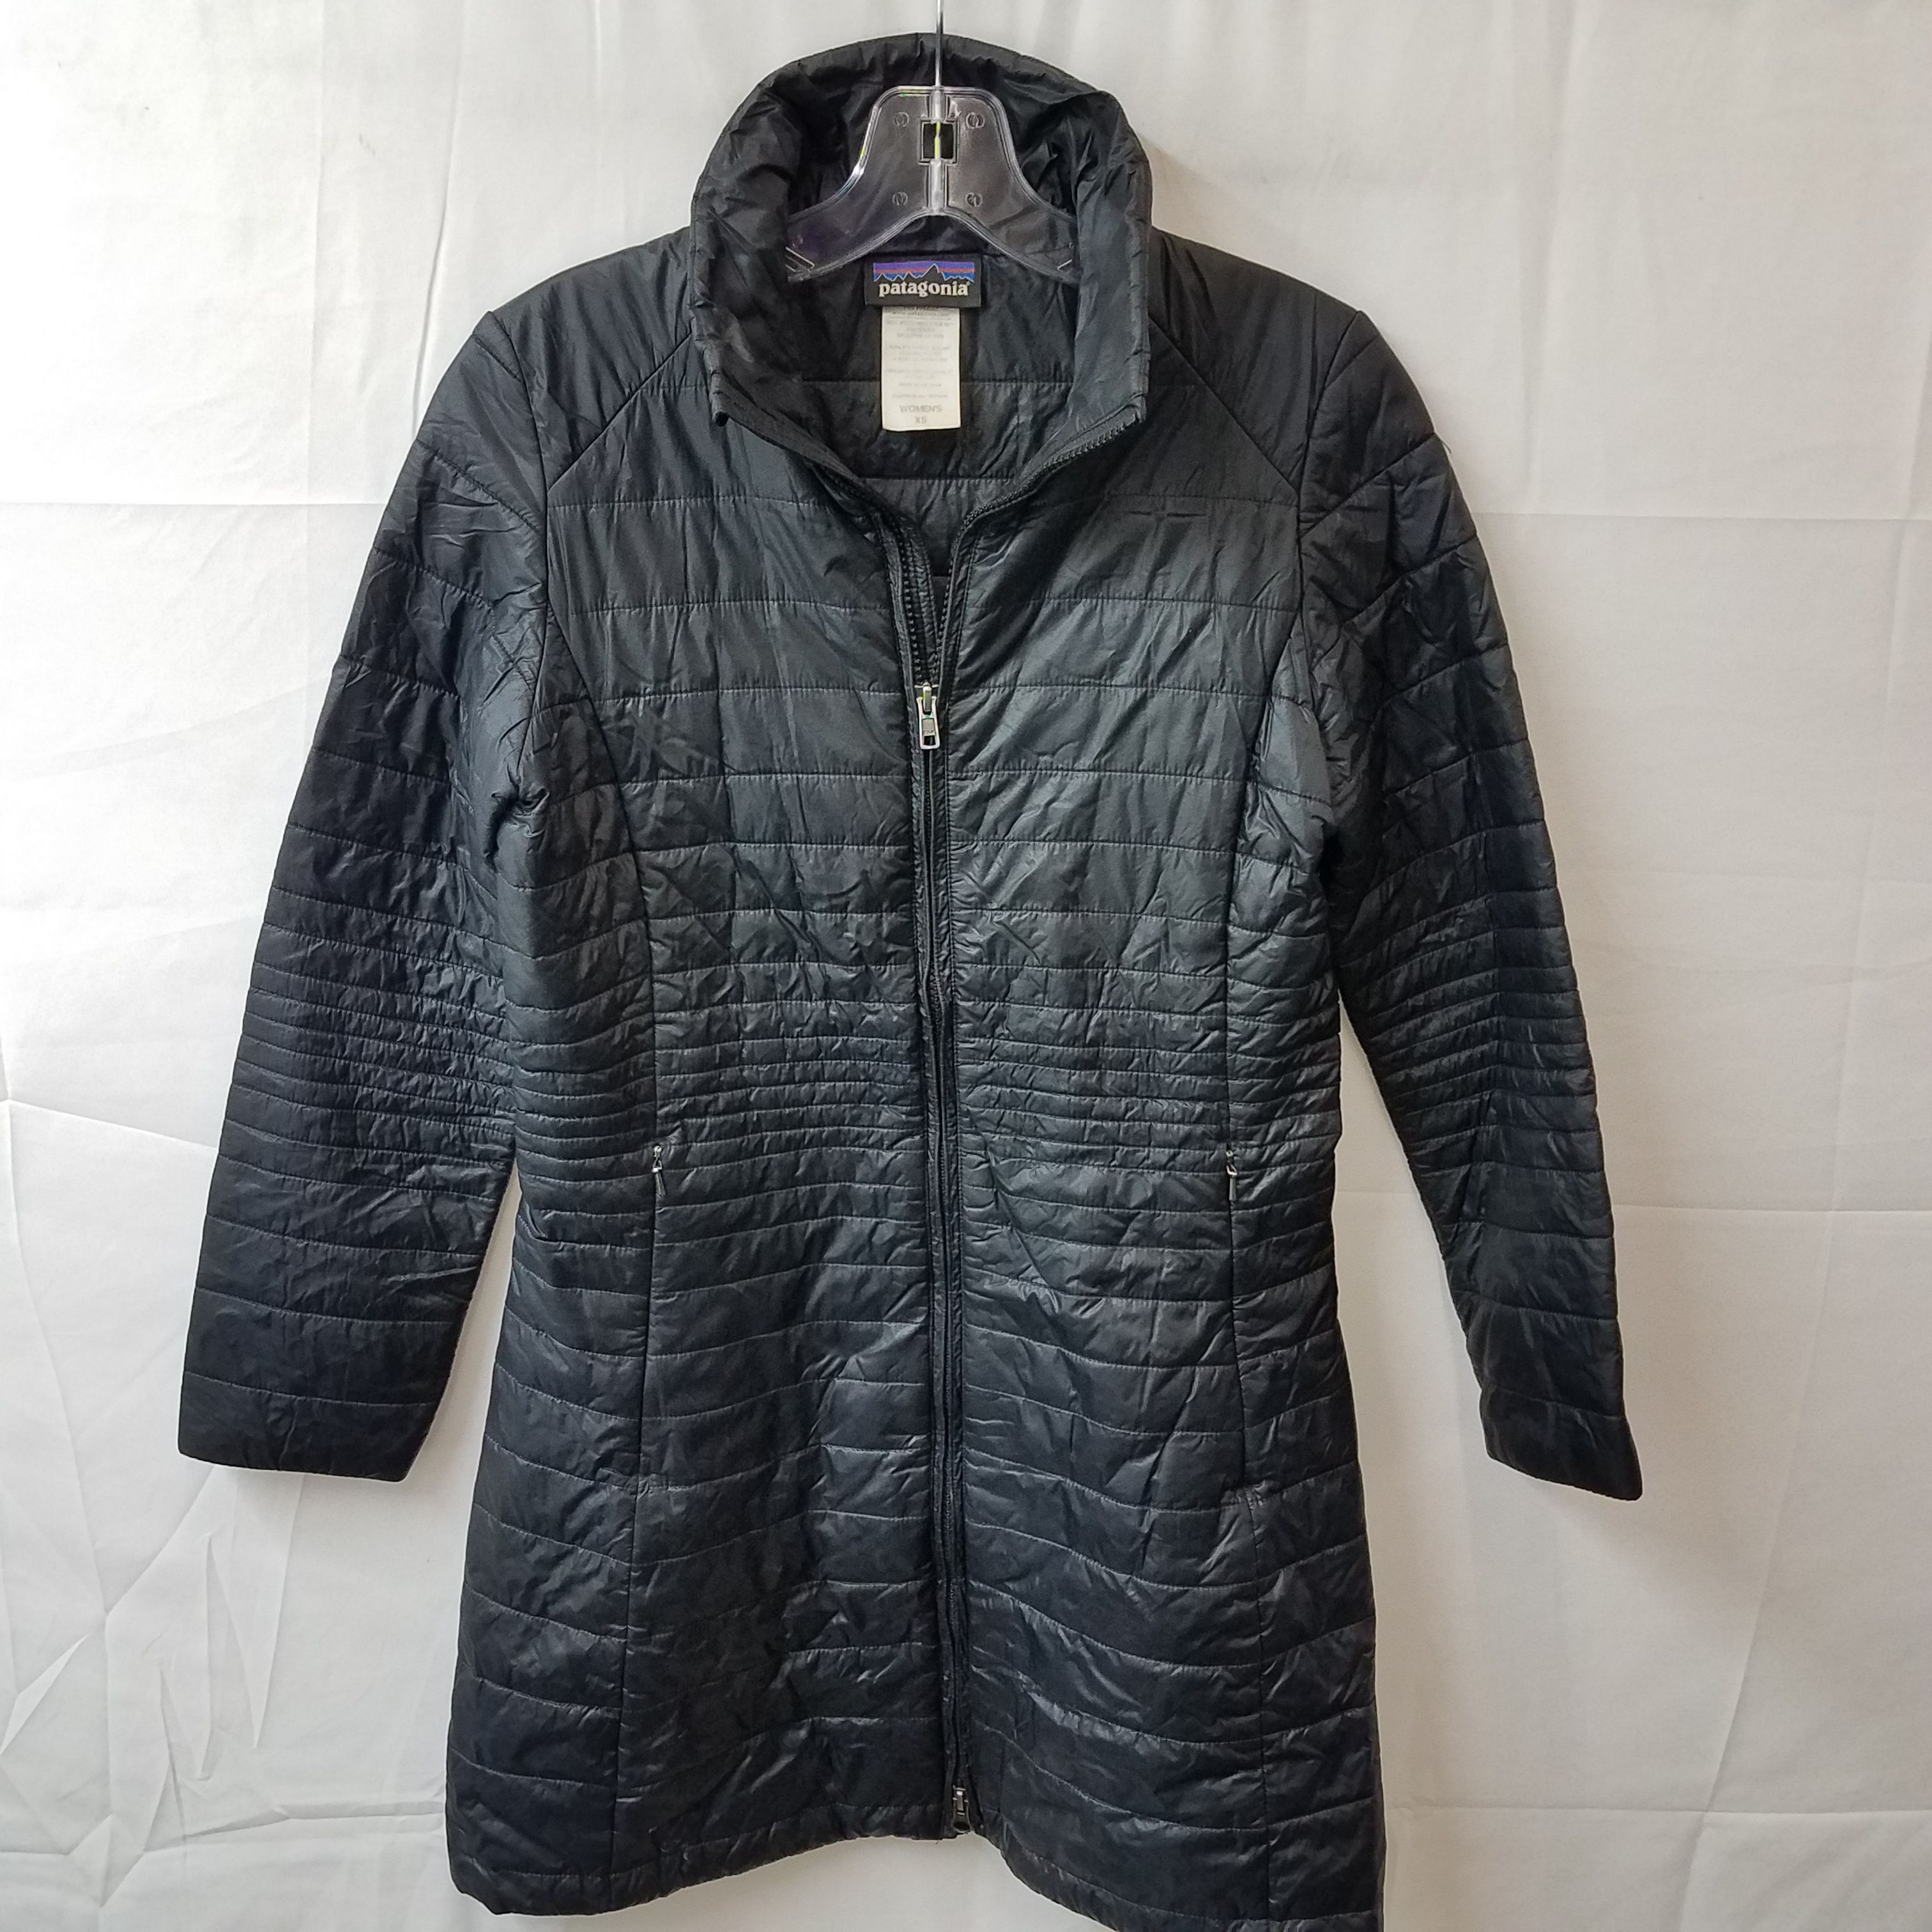 Buy the Patagonia Long Sleeve Black Full Zip Outdoor Coat Jacket Women's  Size XS